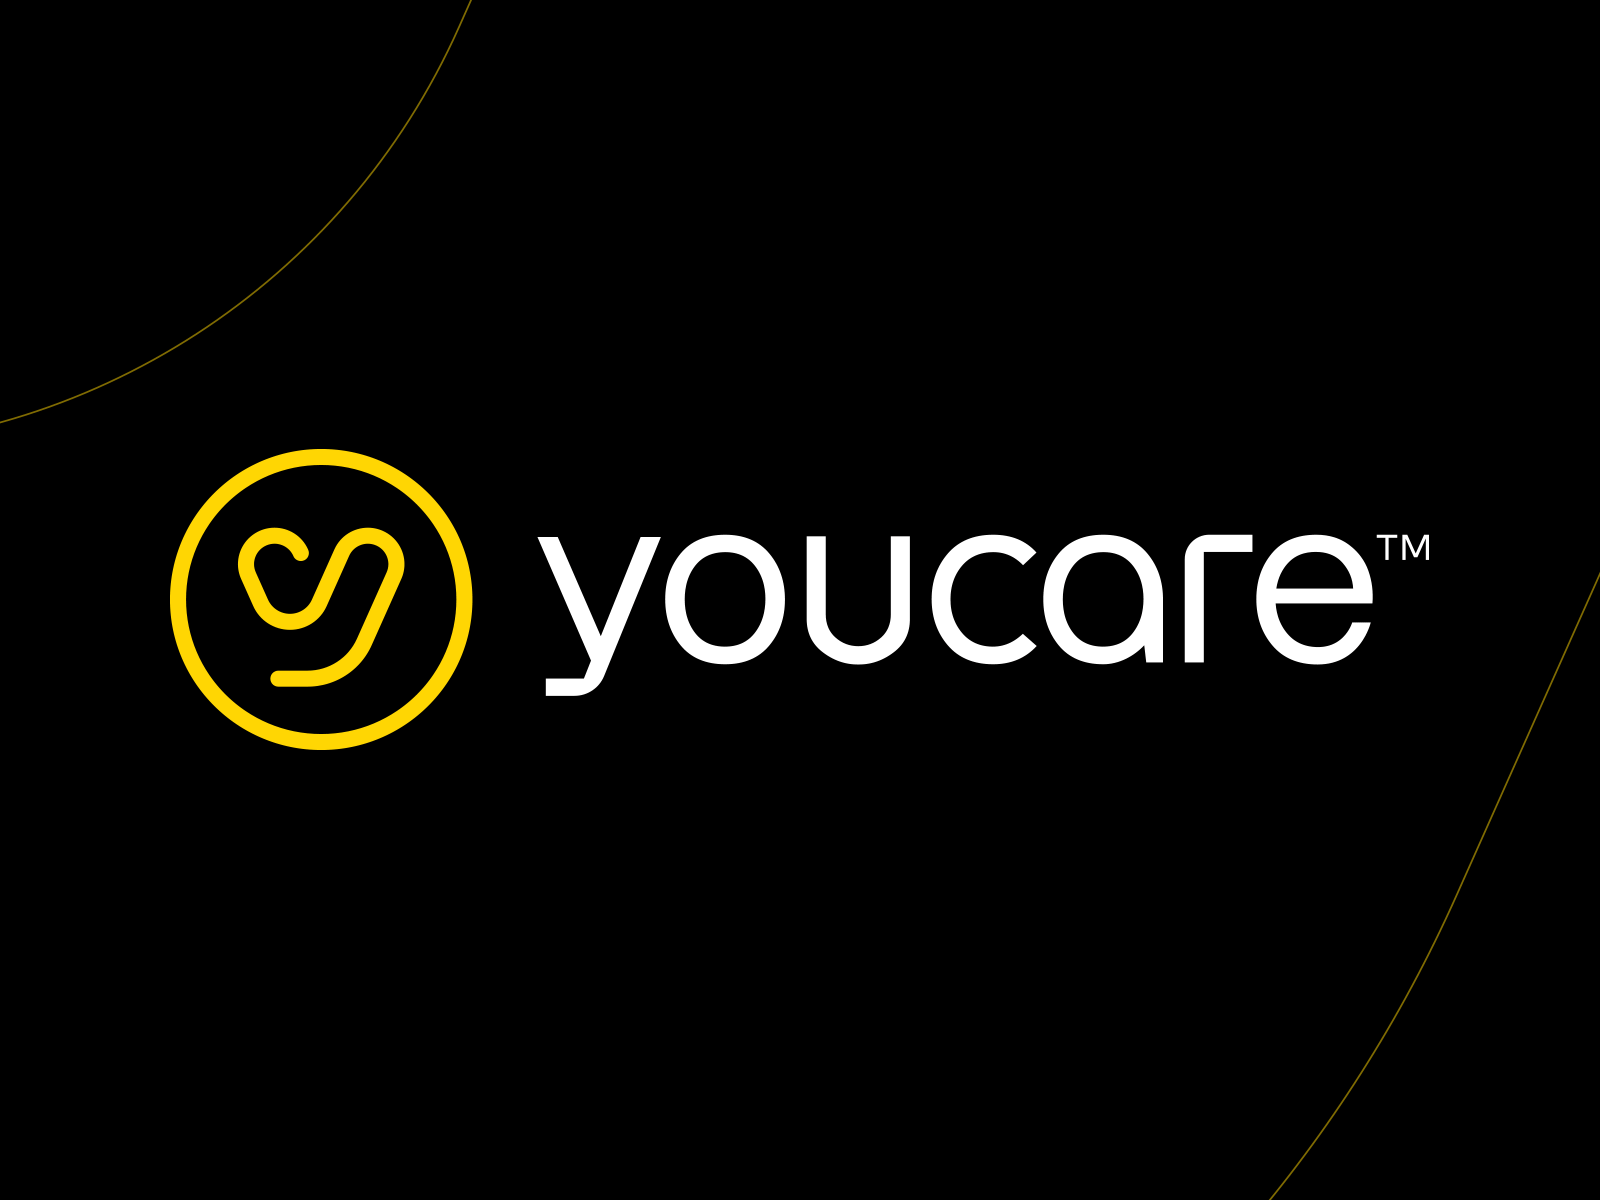 Youcare™